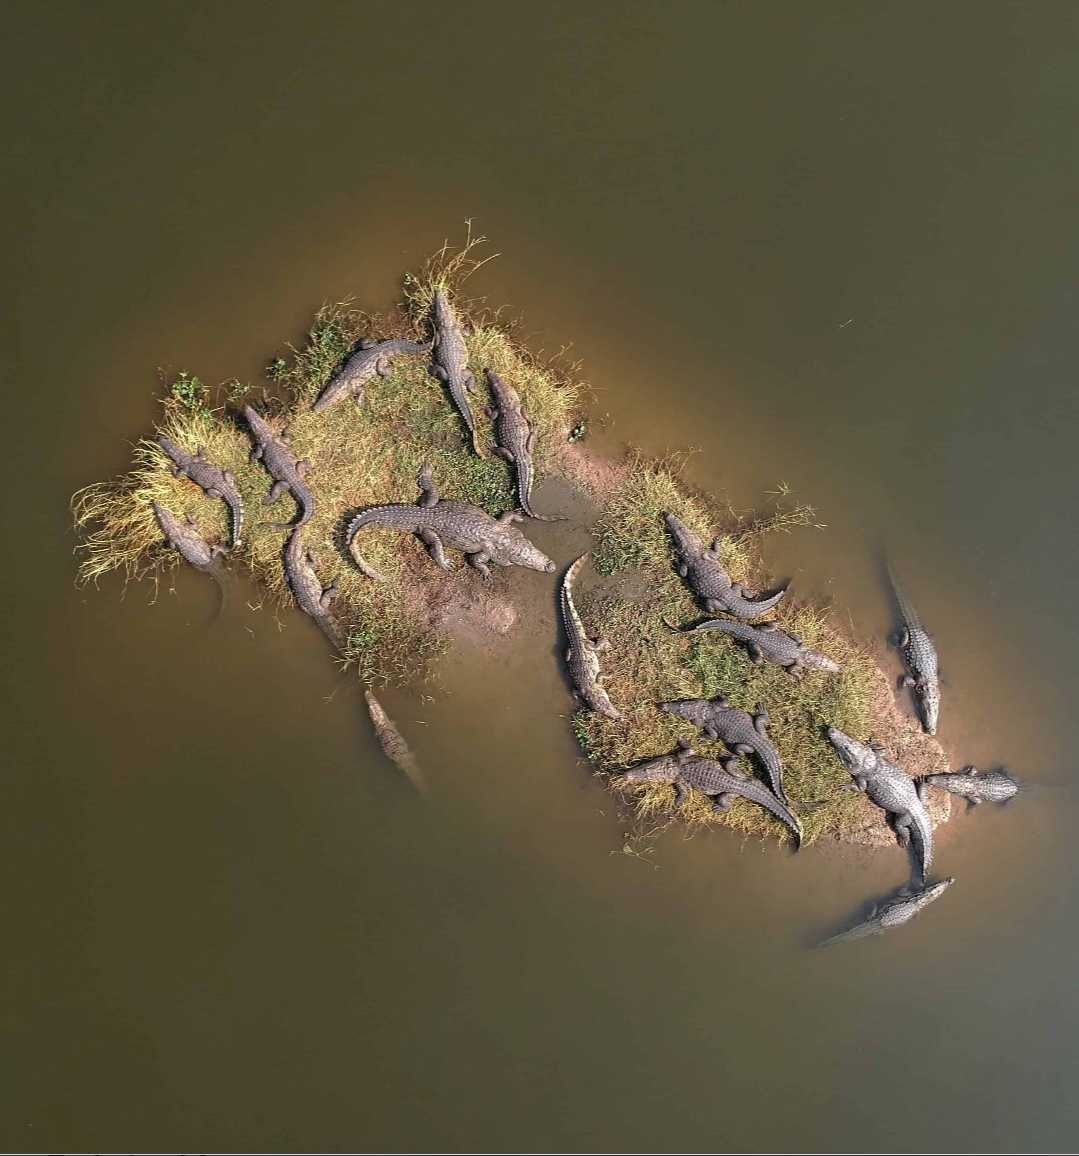 crocodiles lounge in the water